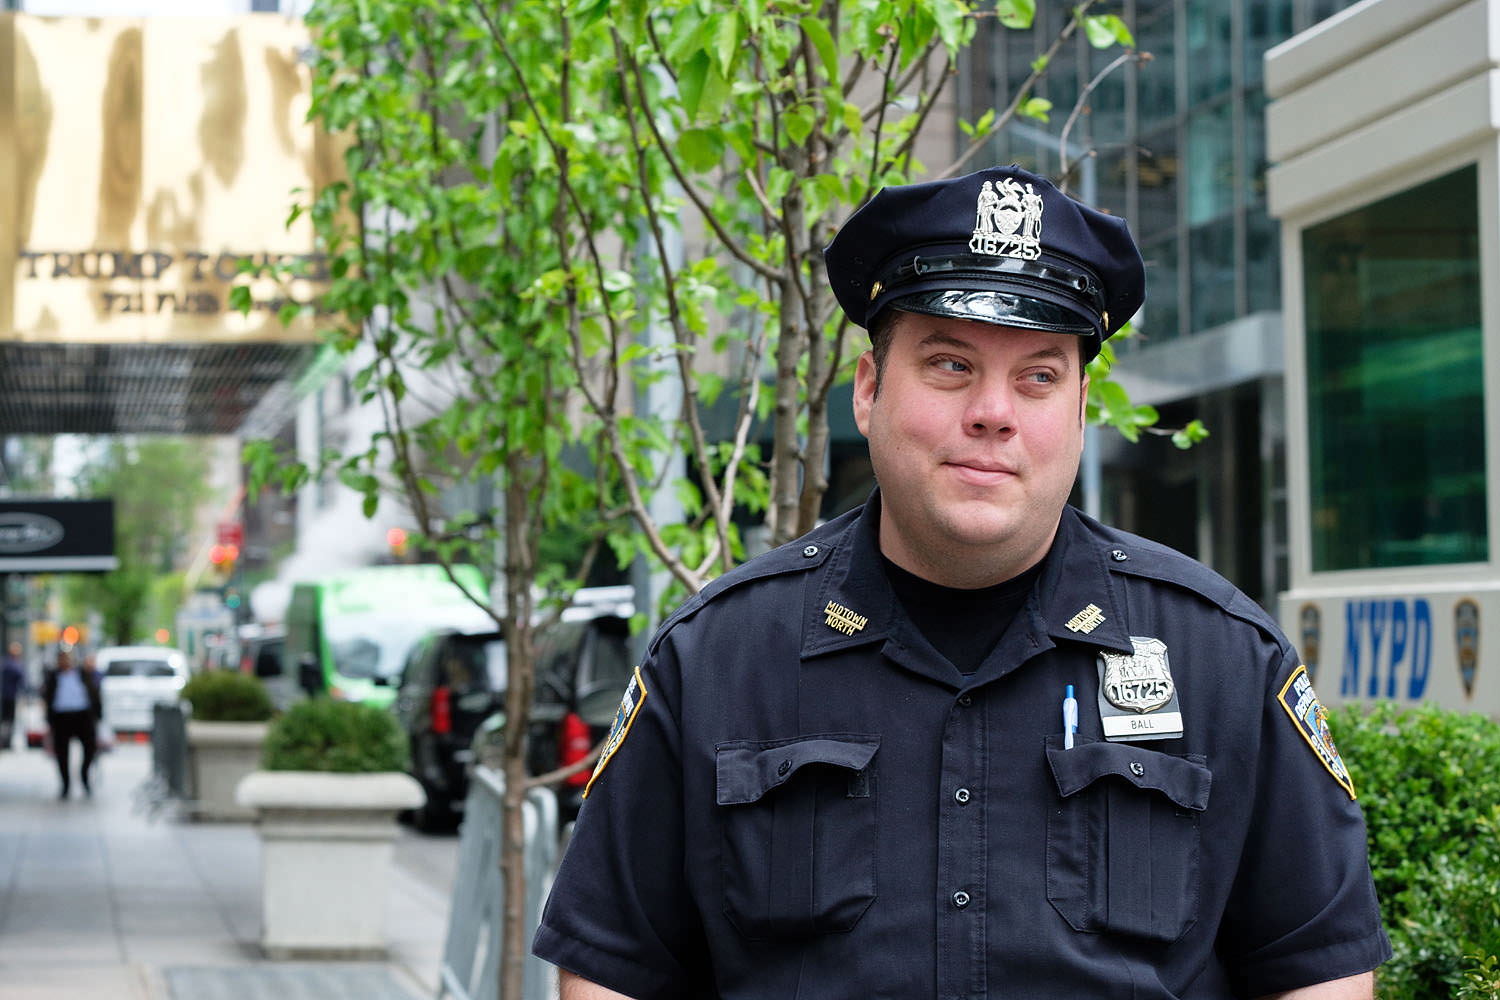 Police officer guarding Trump Tower (New York, New York)